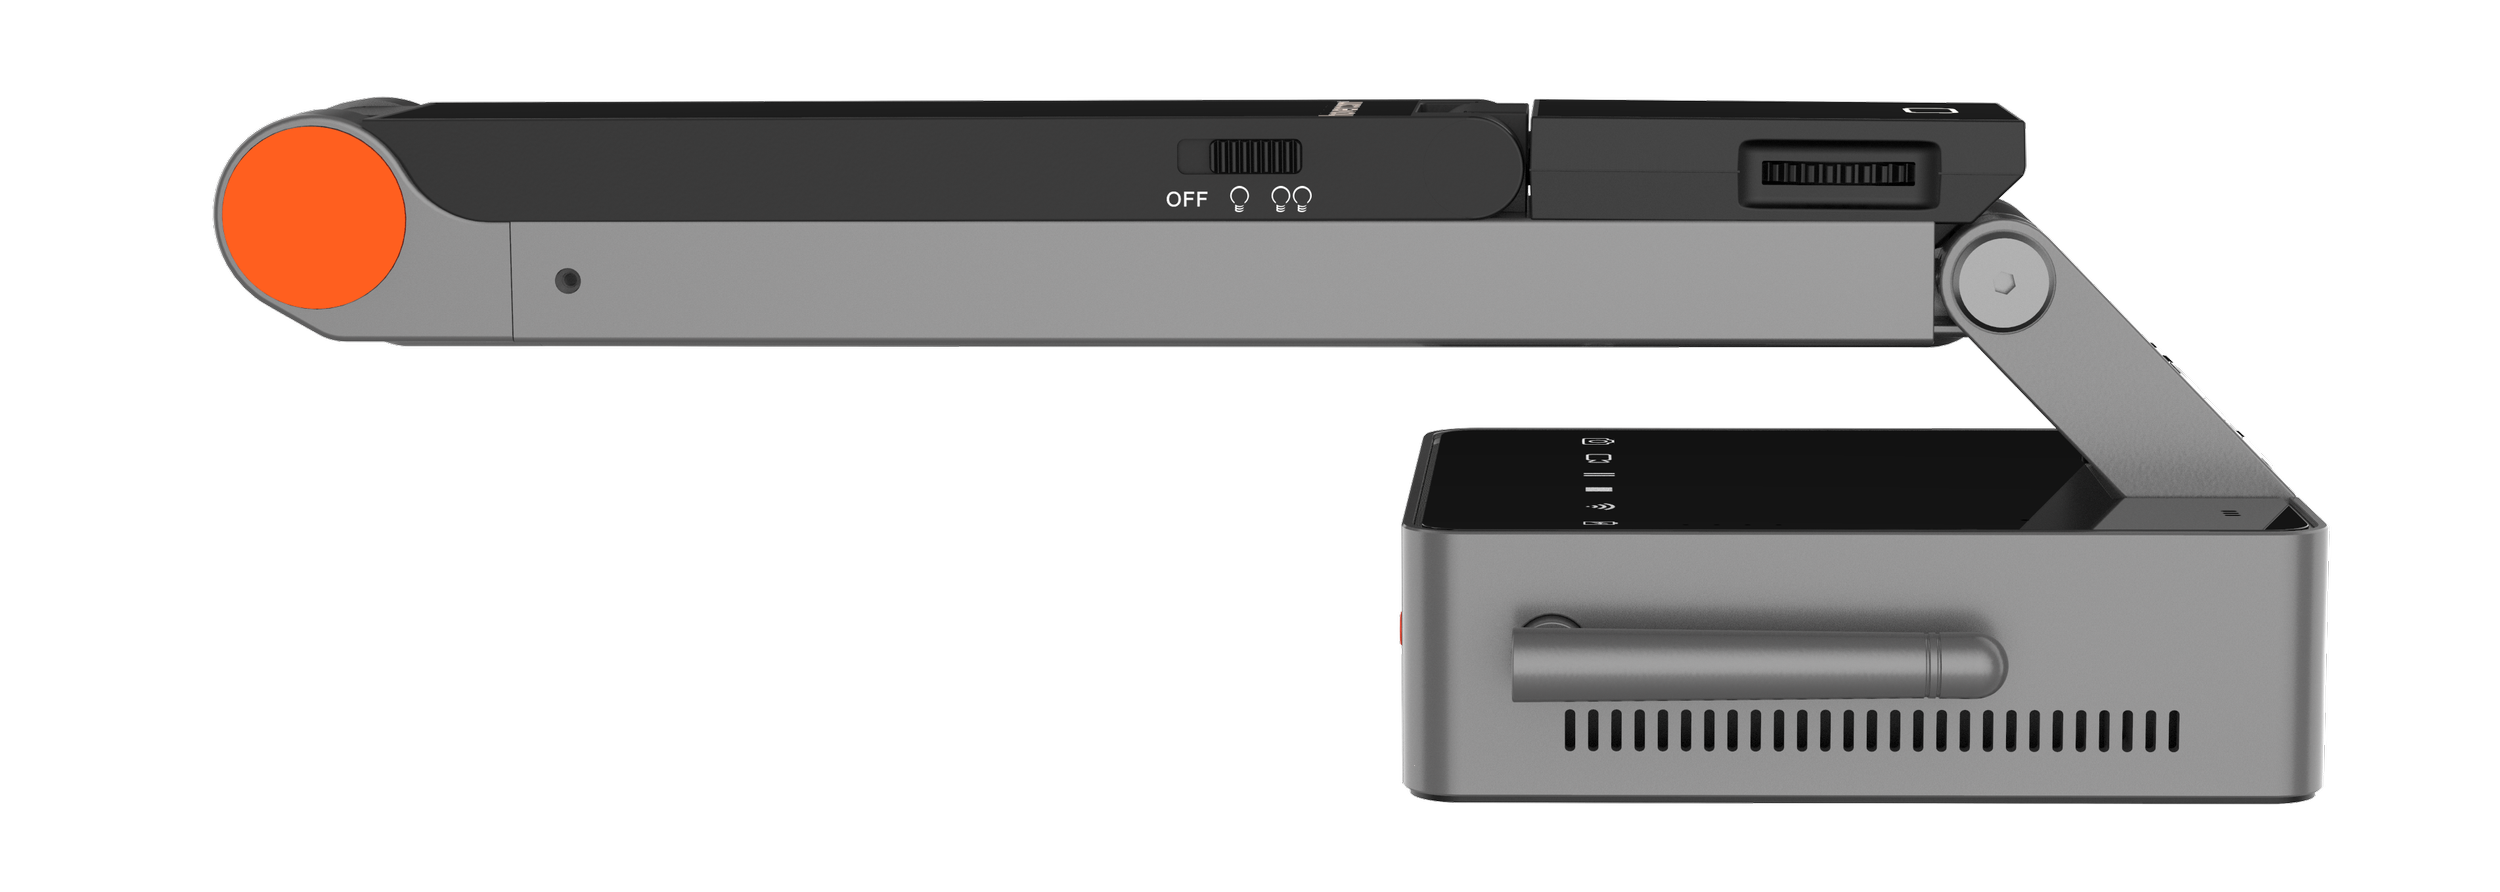 Hovercam Gigabit Wireless Super Camera